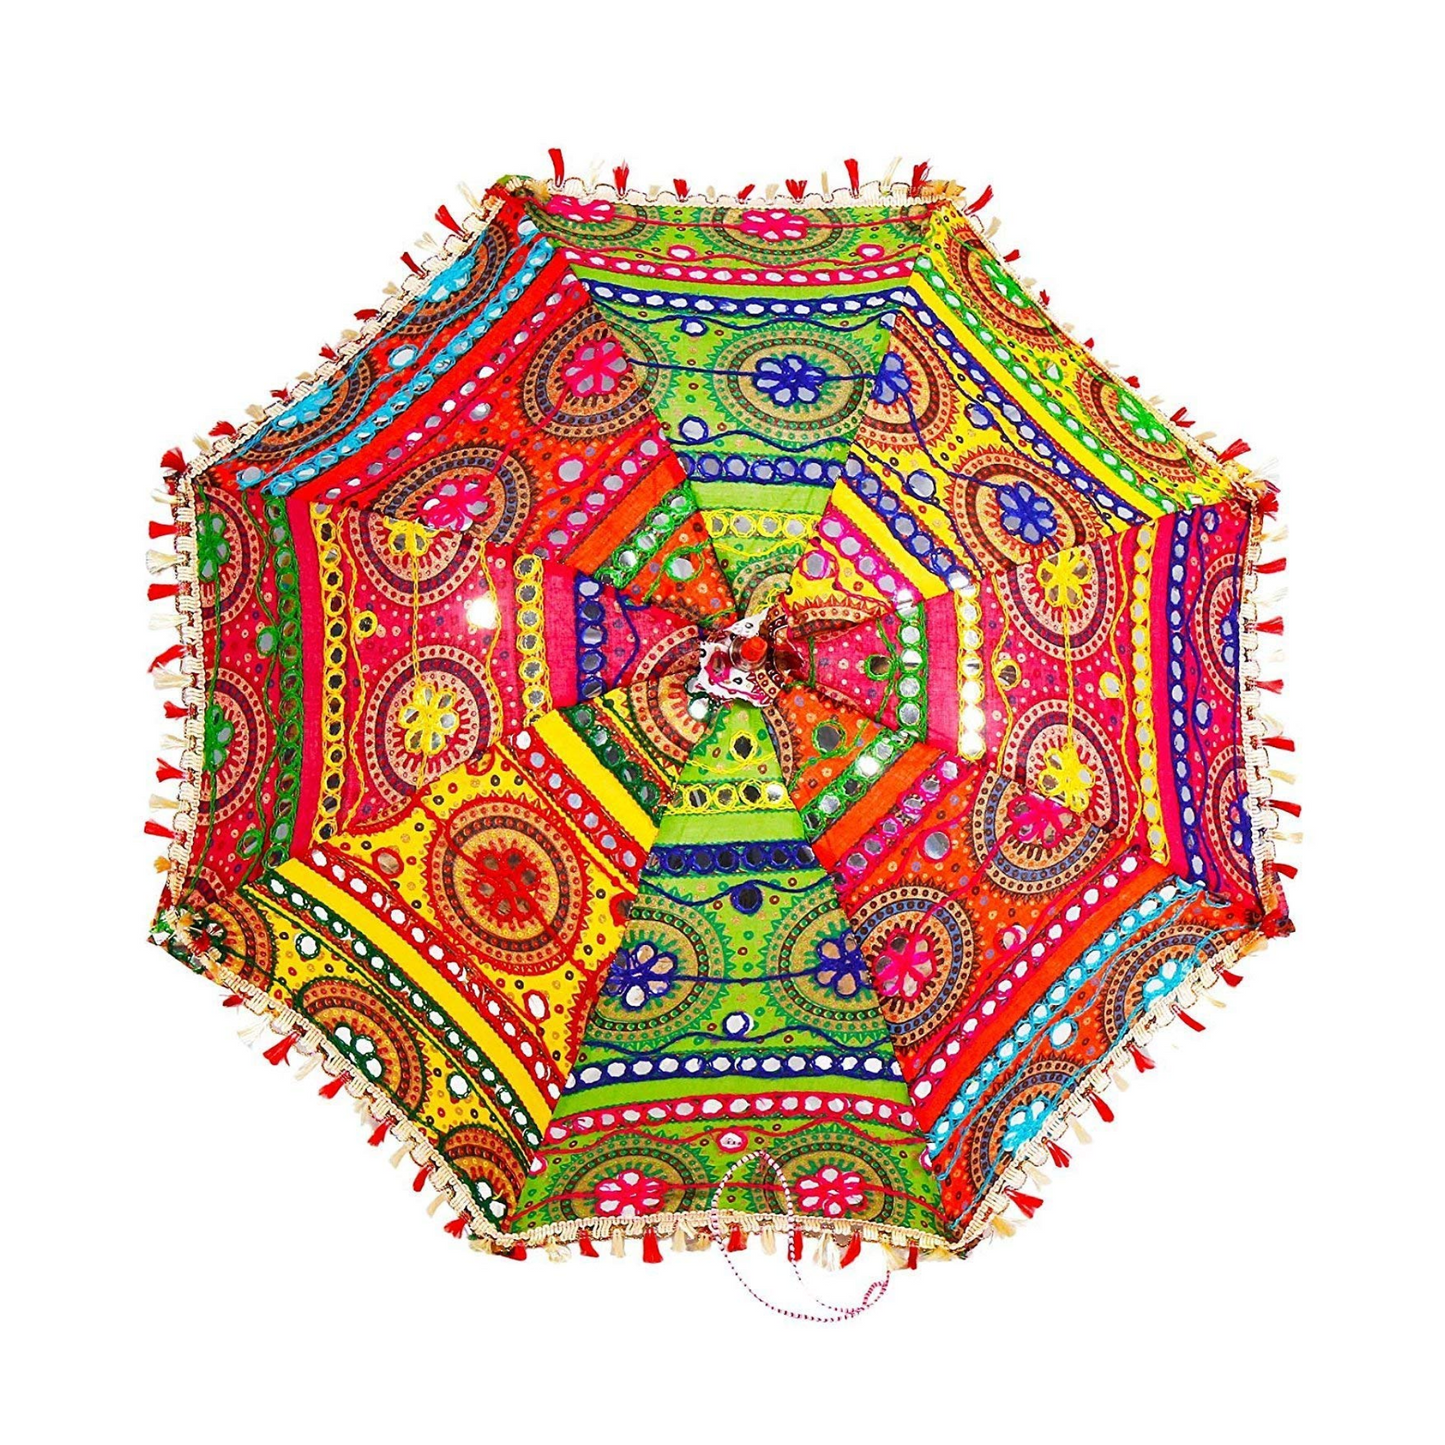 Rajasthani Wedding Umbrella, Jaipuri Embroidery Umbrella for Wedding Decoration Colour & Design May Vary  n